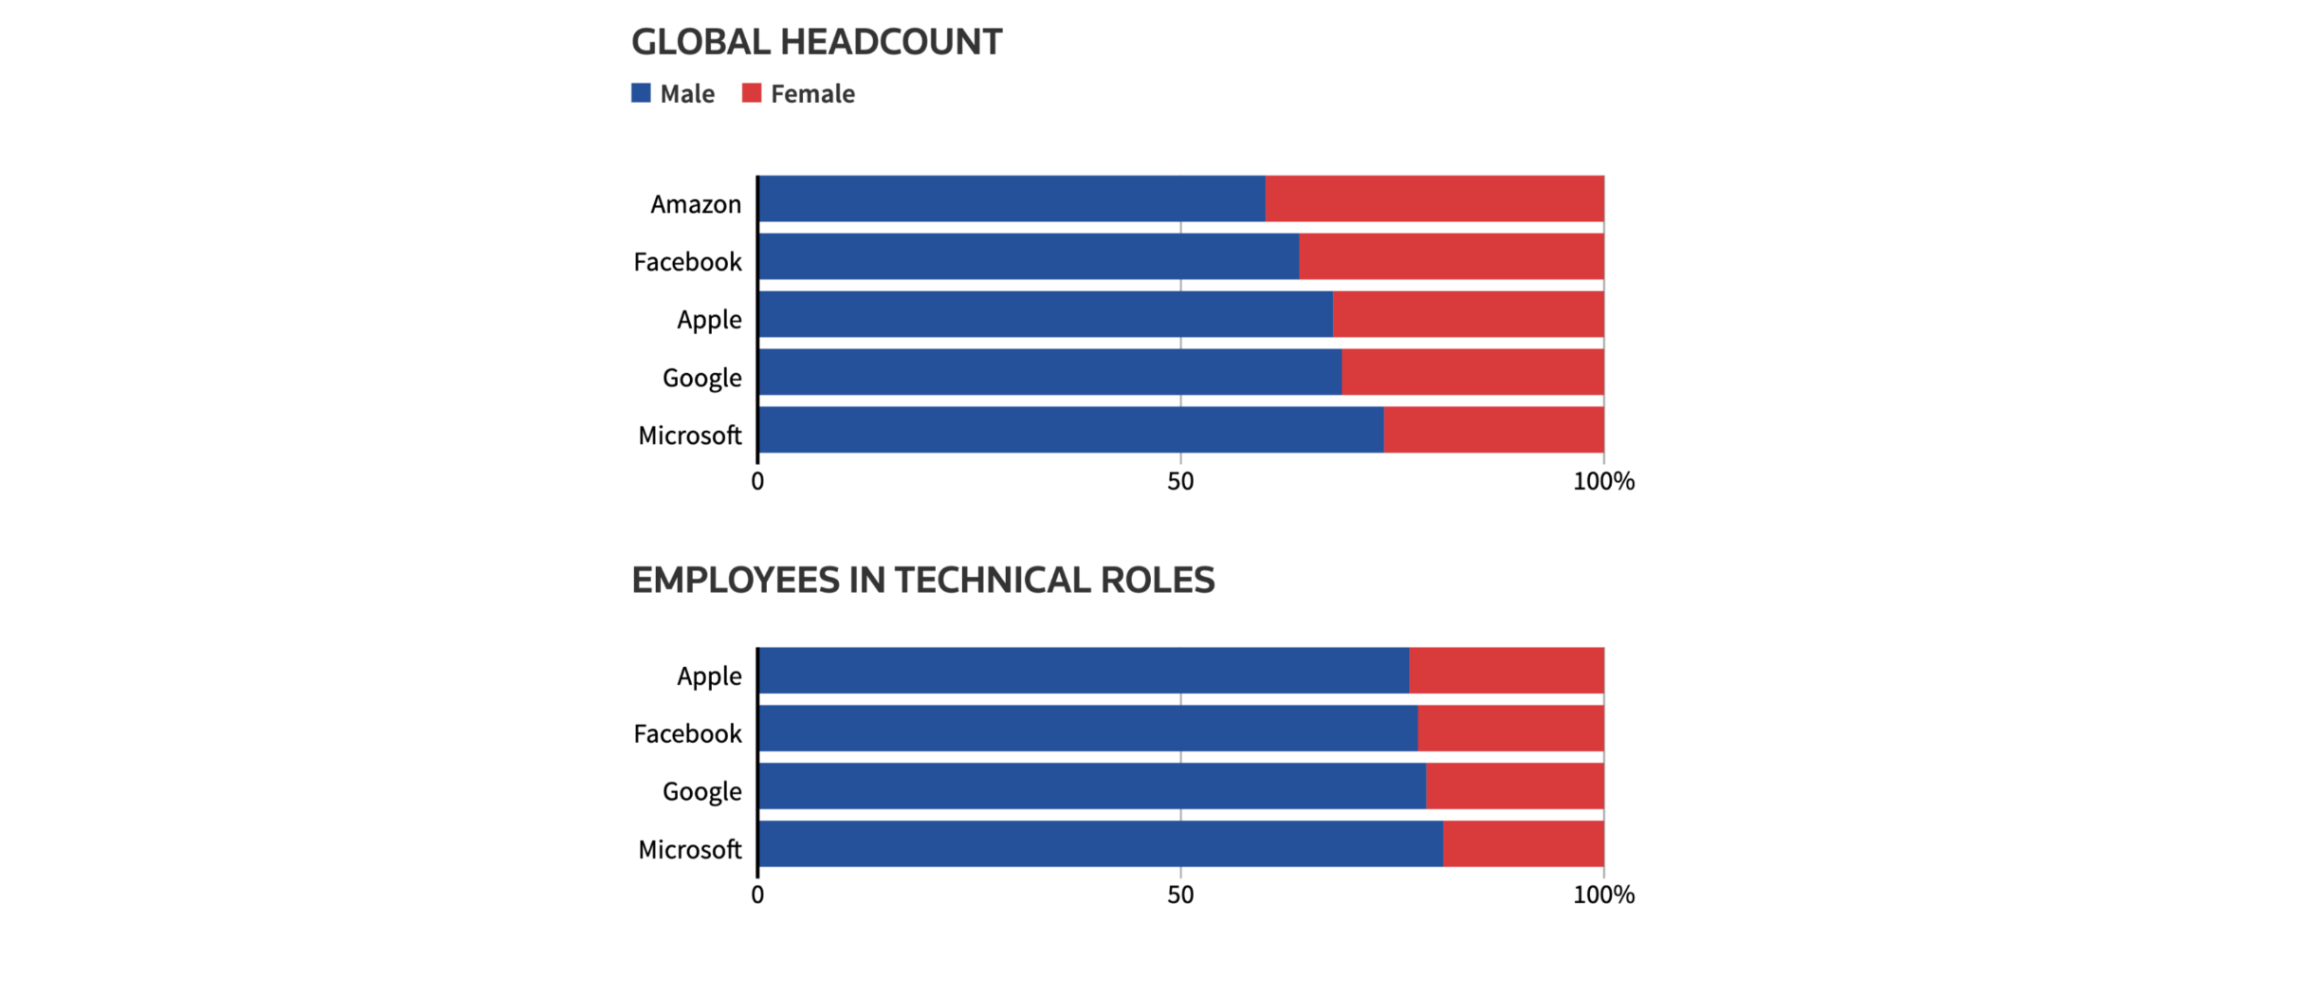 A horizontal bar chart showing gender discrepancies in Amazon's hiring practices